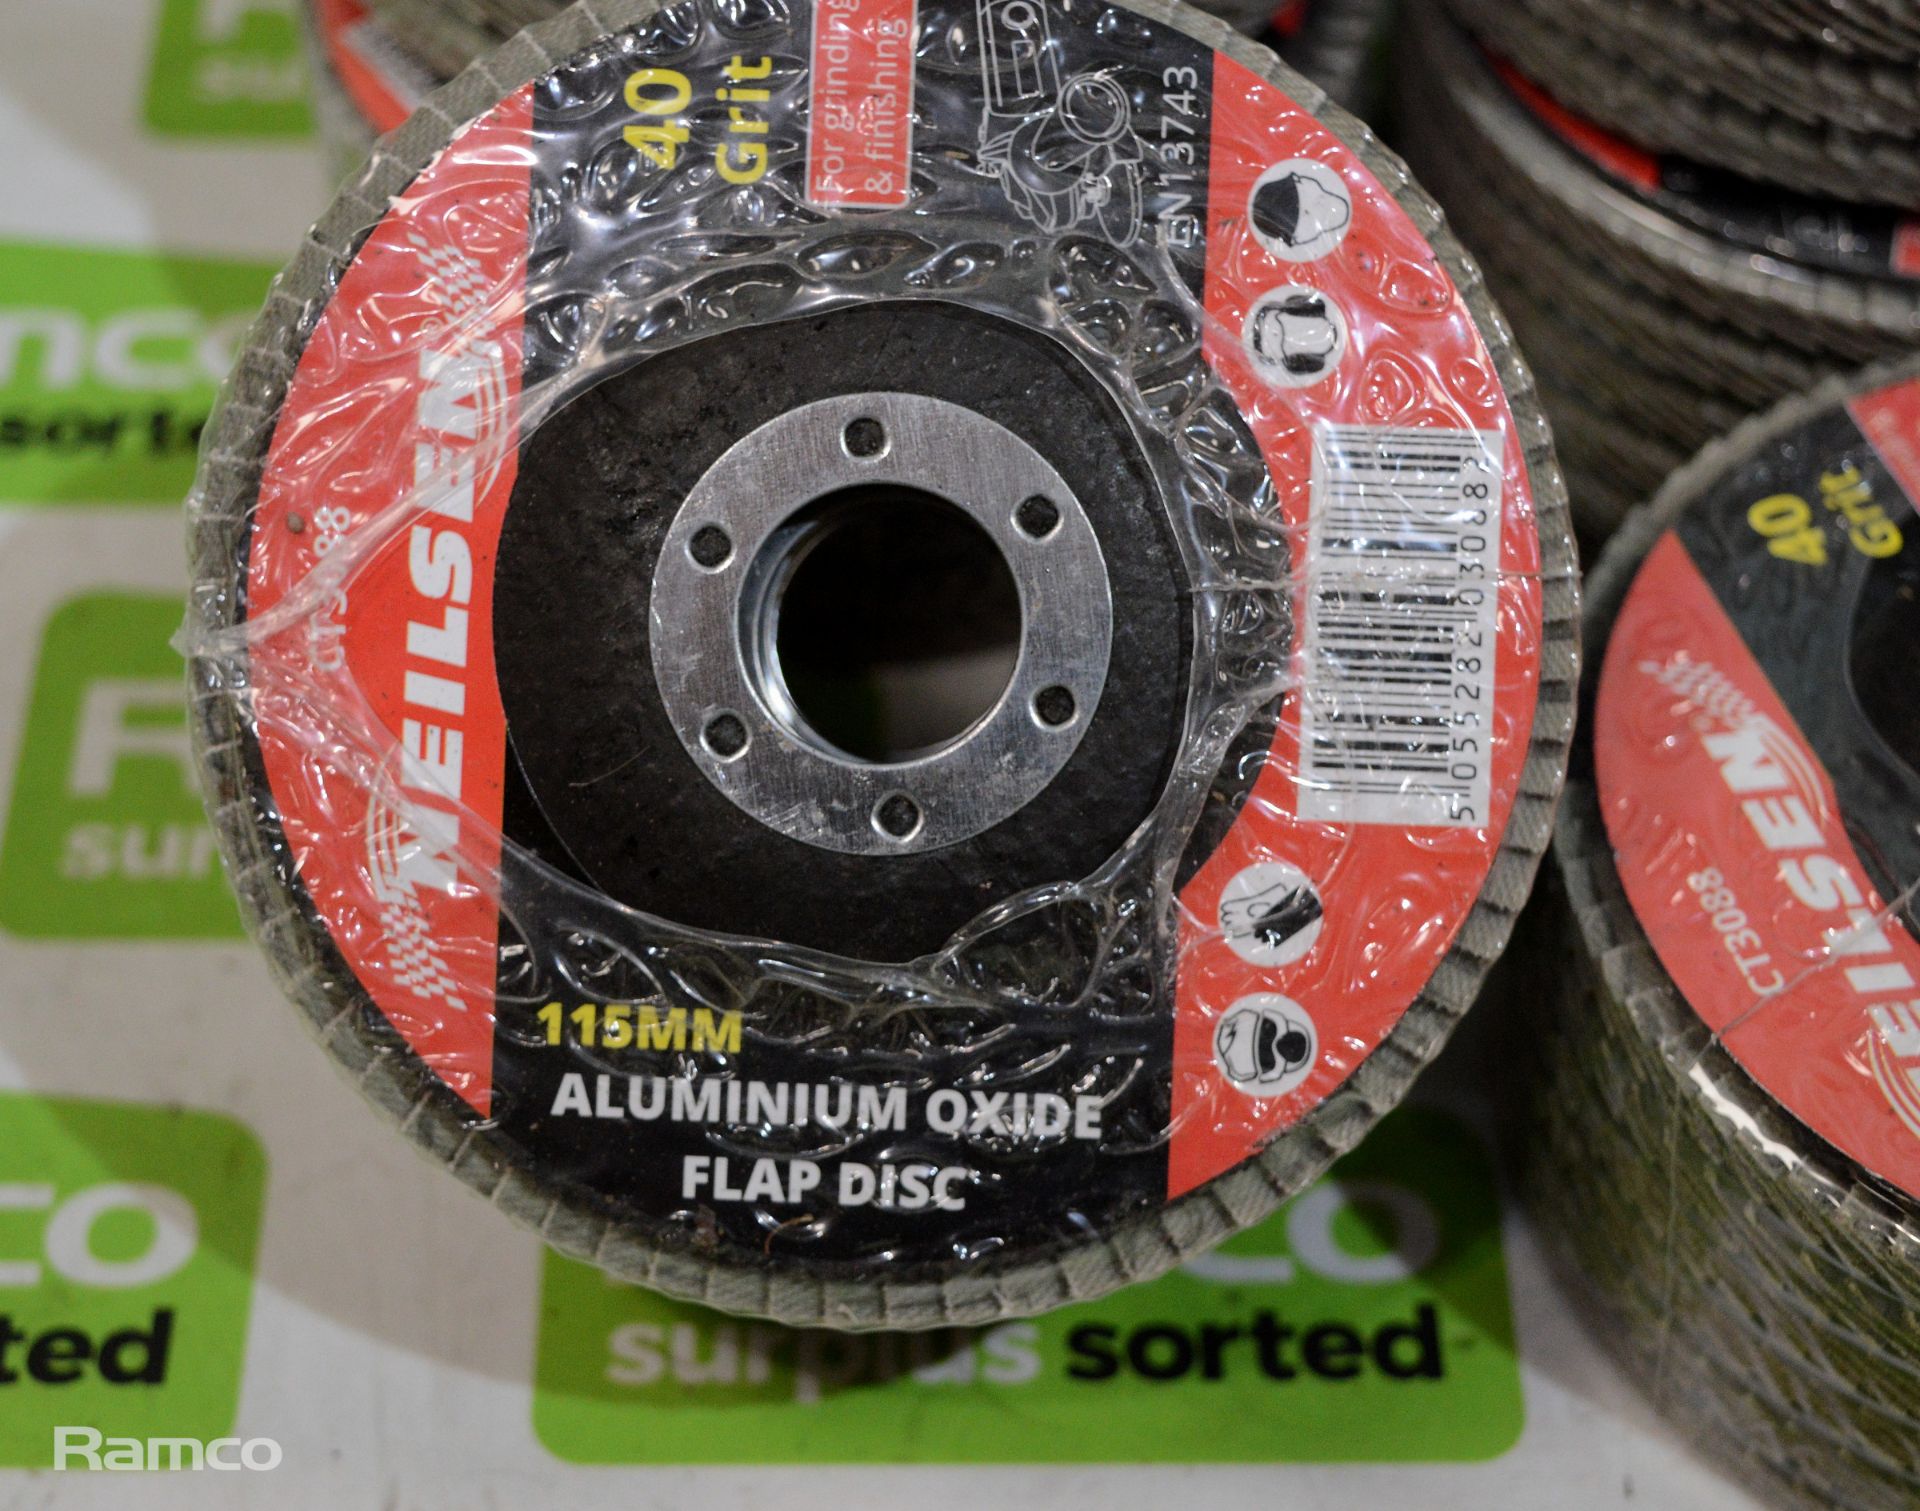 Neilsen 40 grit aluminium oxide flap discs - 6 per pack - 6 packs - Image 2 of 3